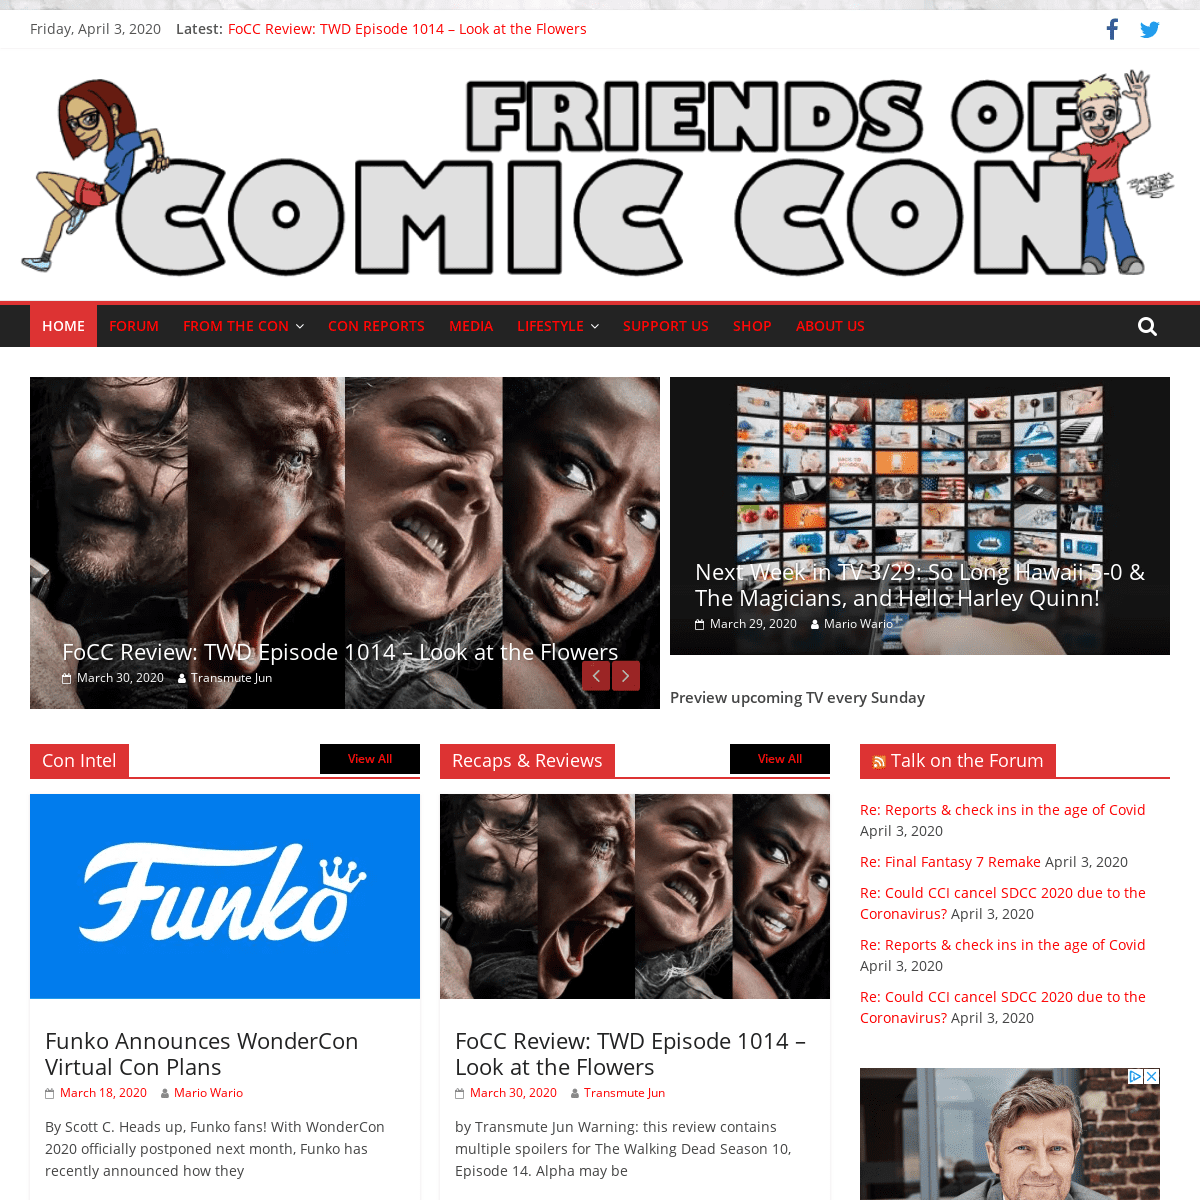 A complete backup of friendsofcc.com